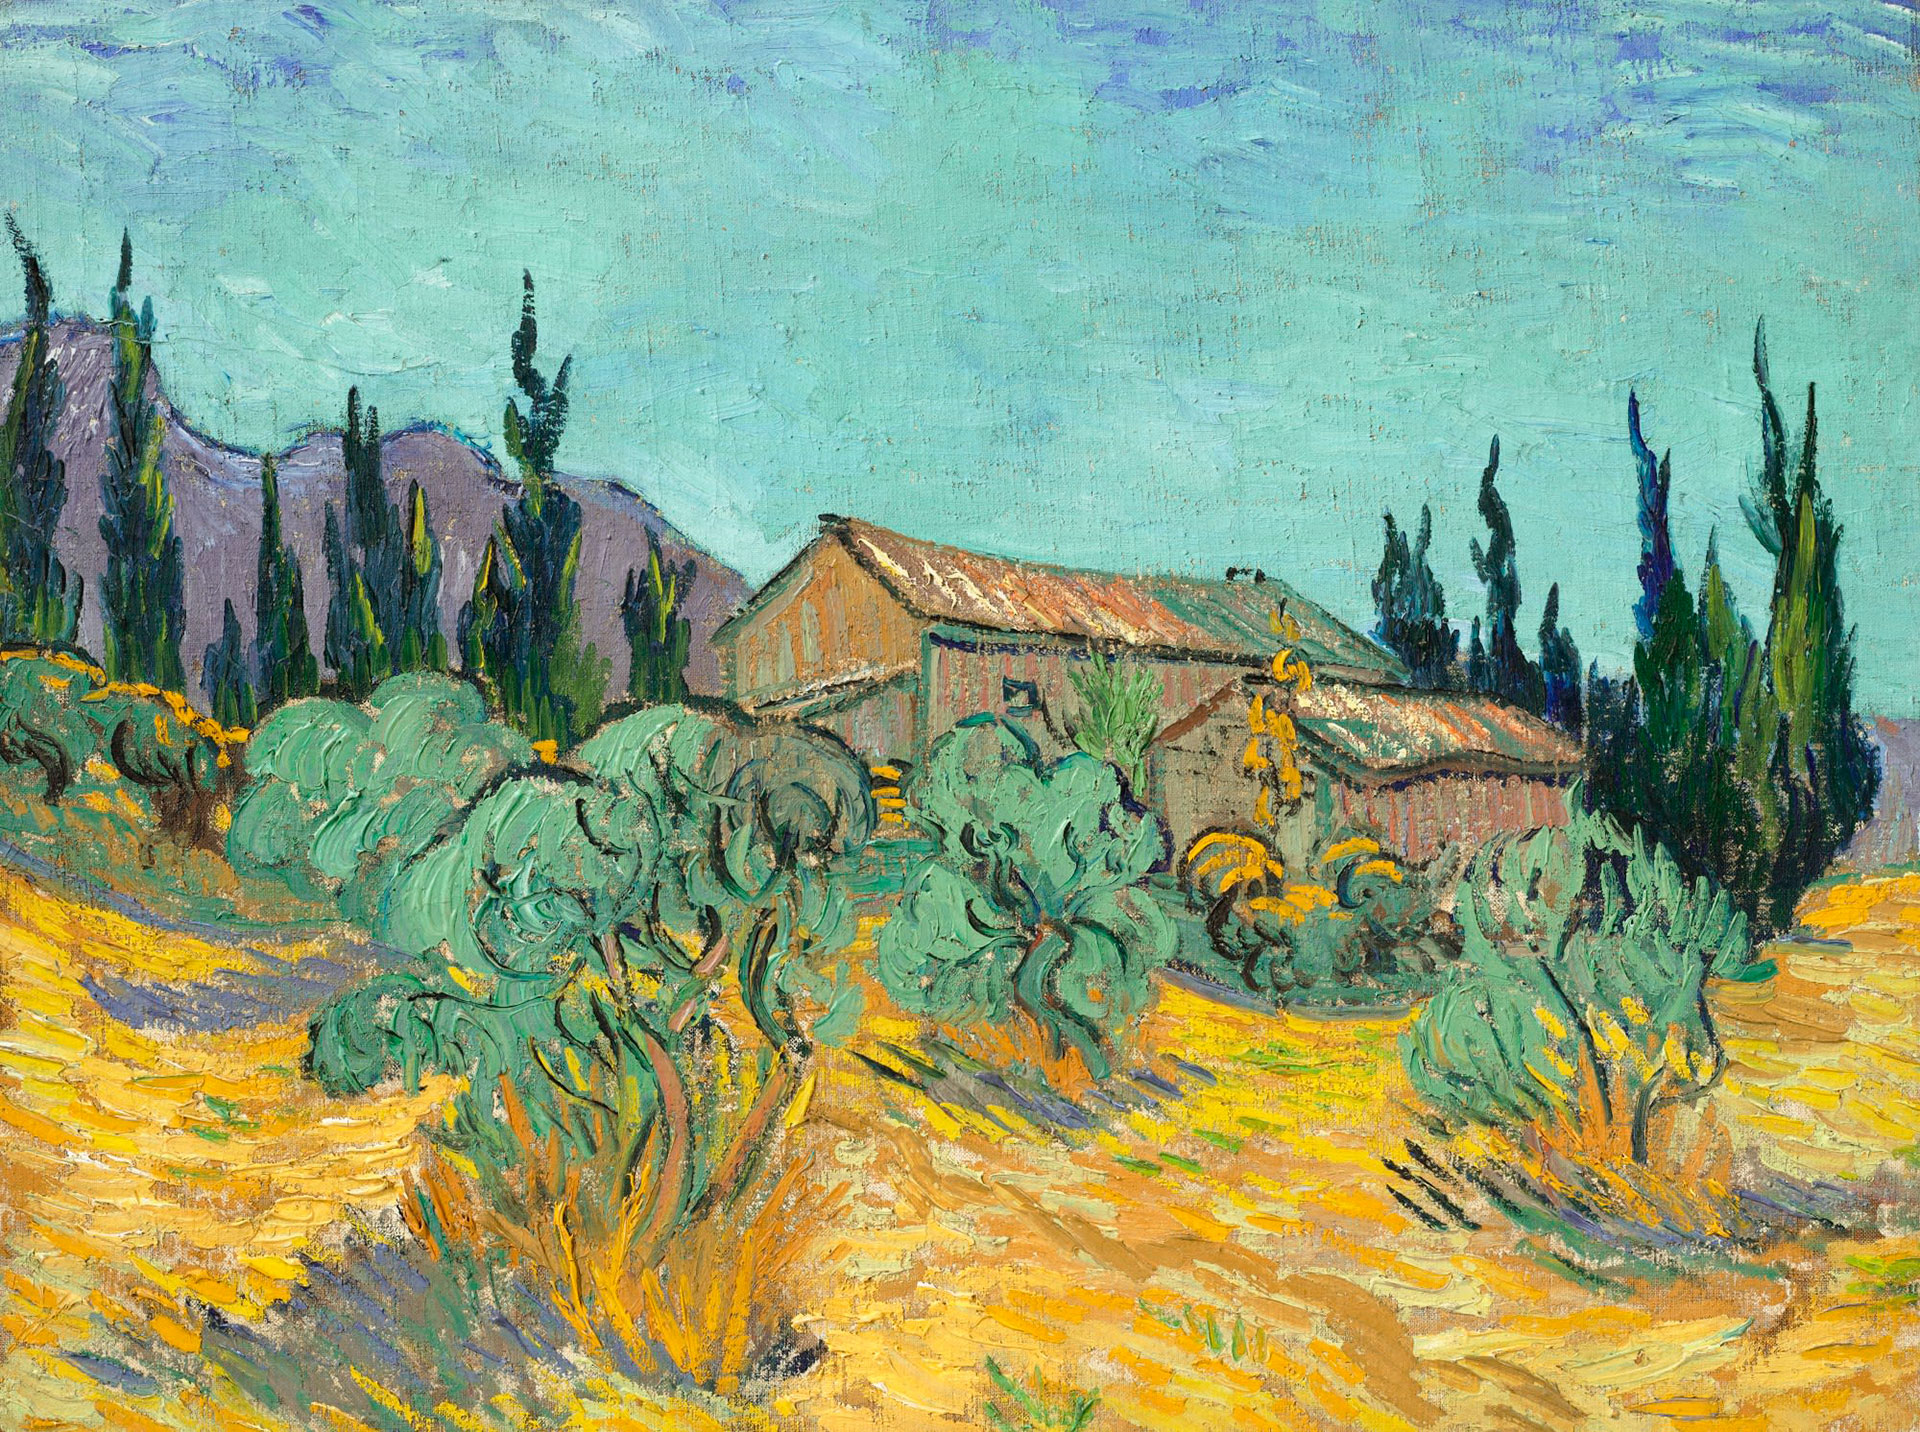 "Cabanes de bois parmi les oliviers et cyprès" (1889) del pintor holandés fue vendido por más de 70 millones de dólares en la subasta de Christie's